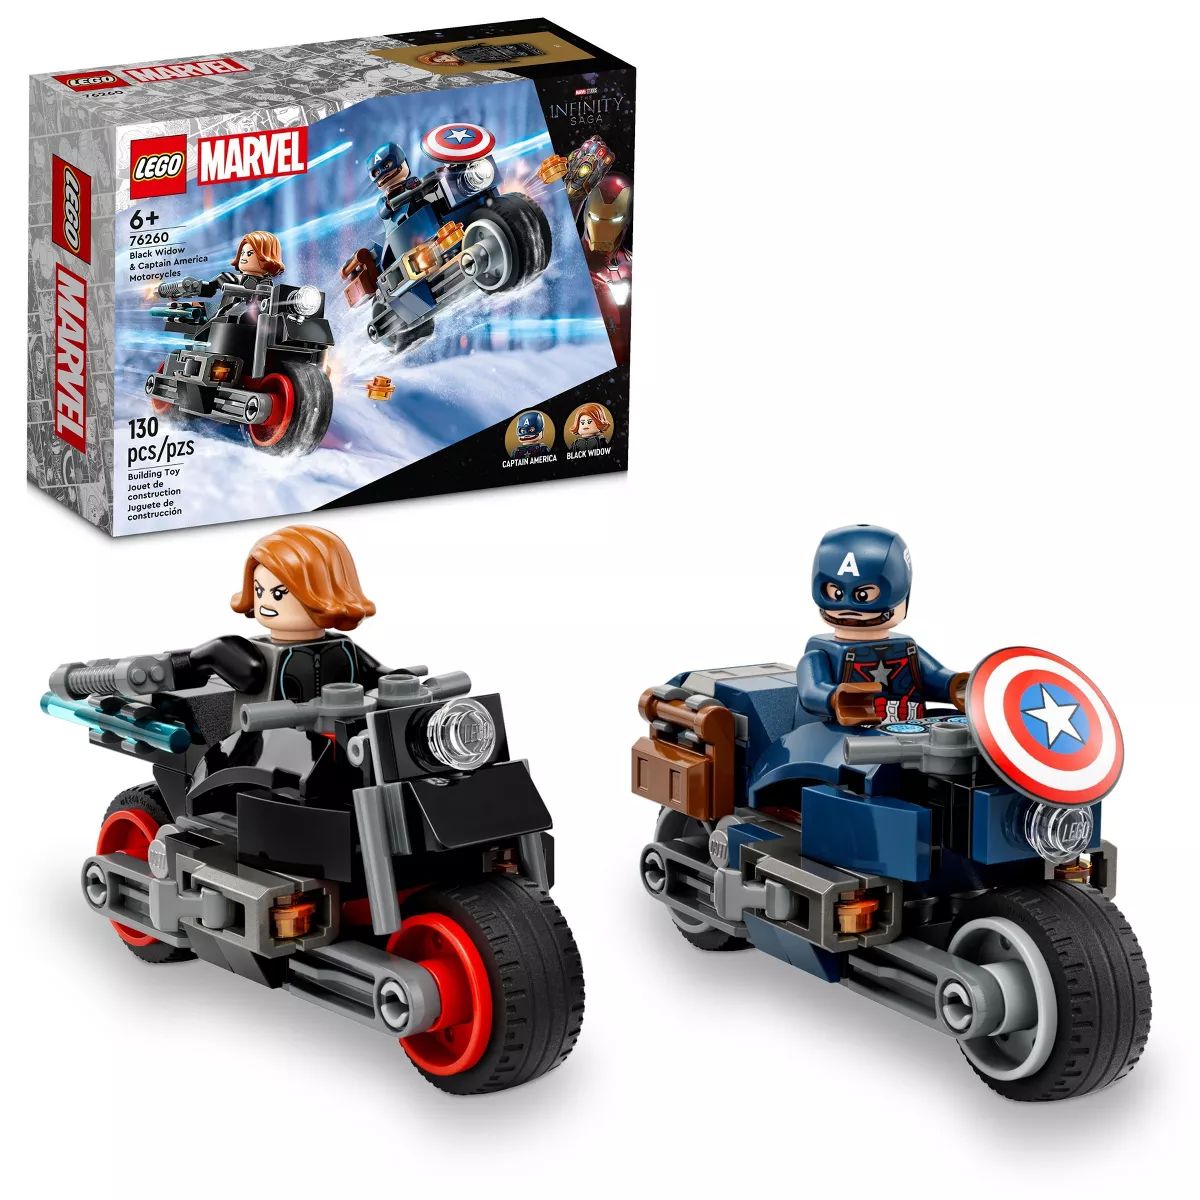 LEGO Marvel Black Widow & Captain America Motorcycles Playset 76260 | Target